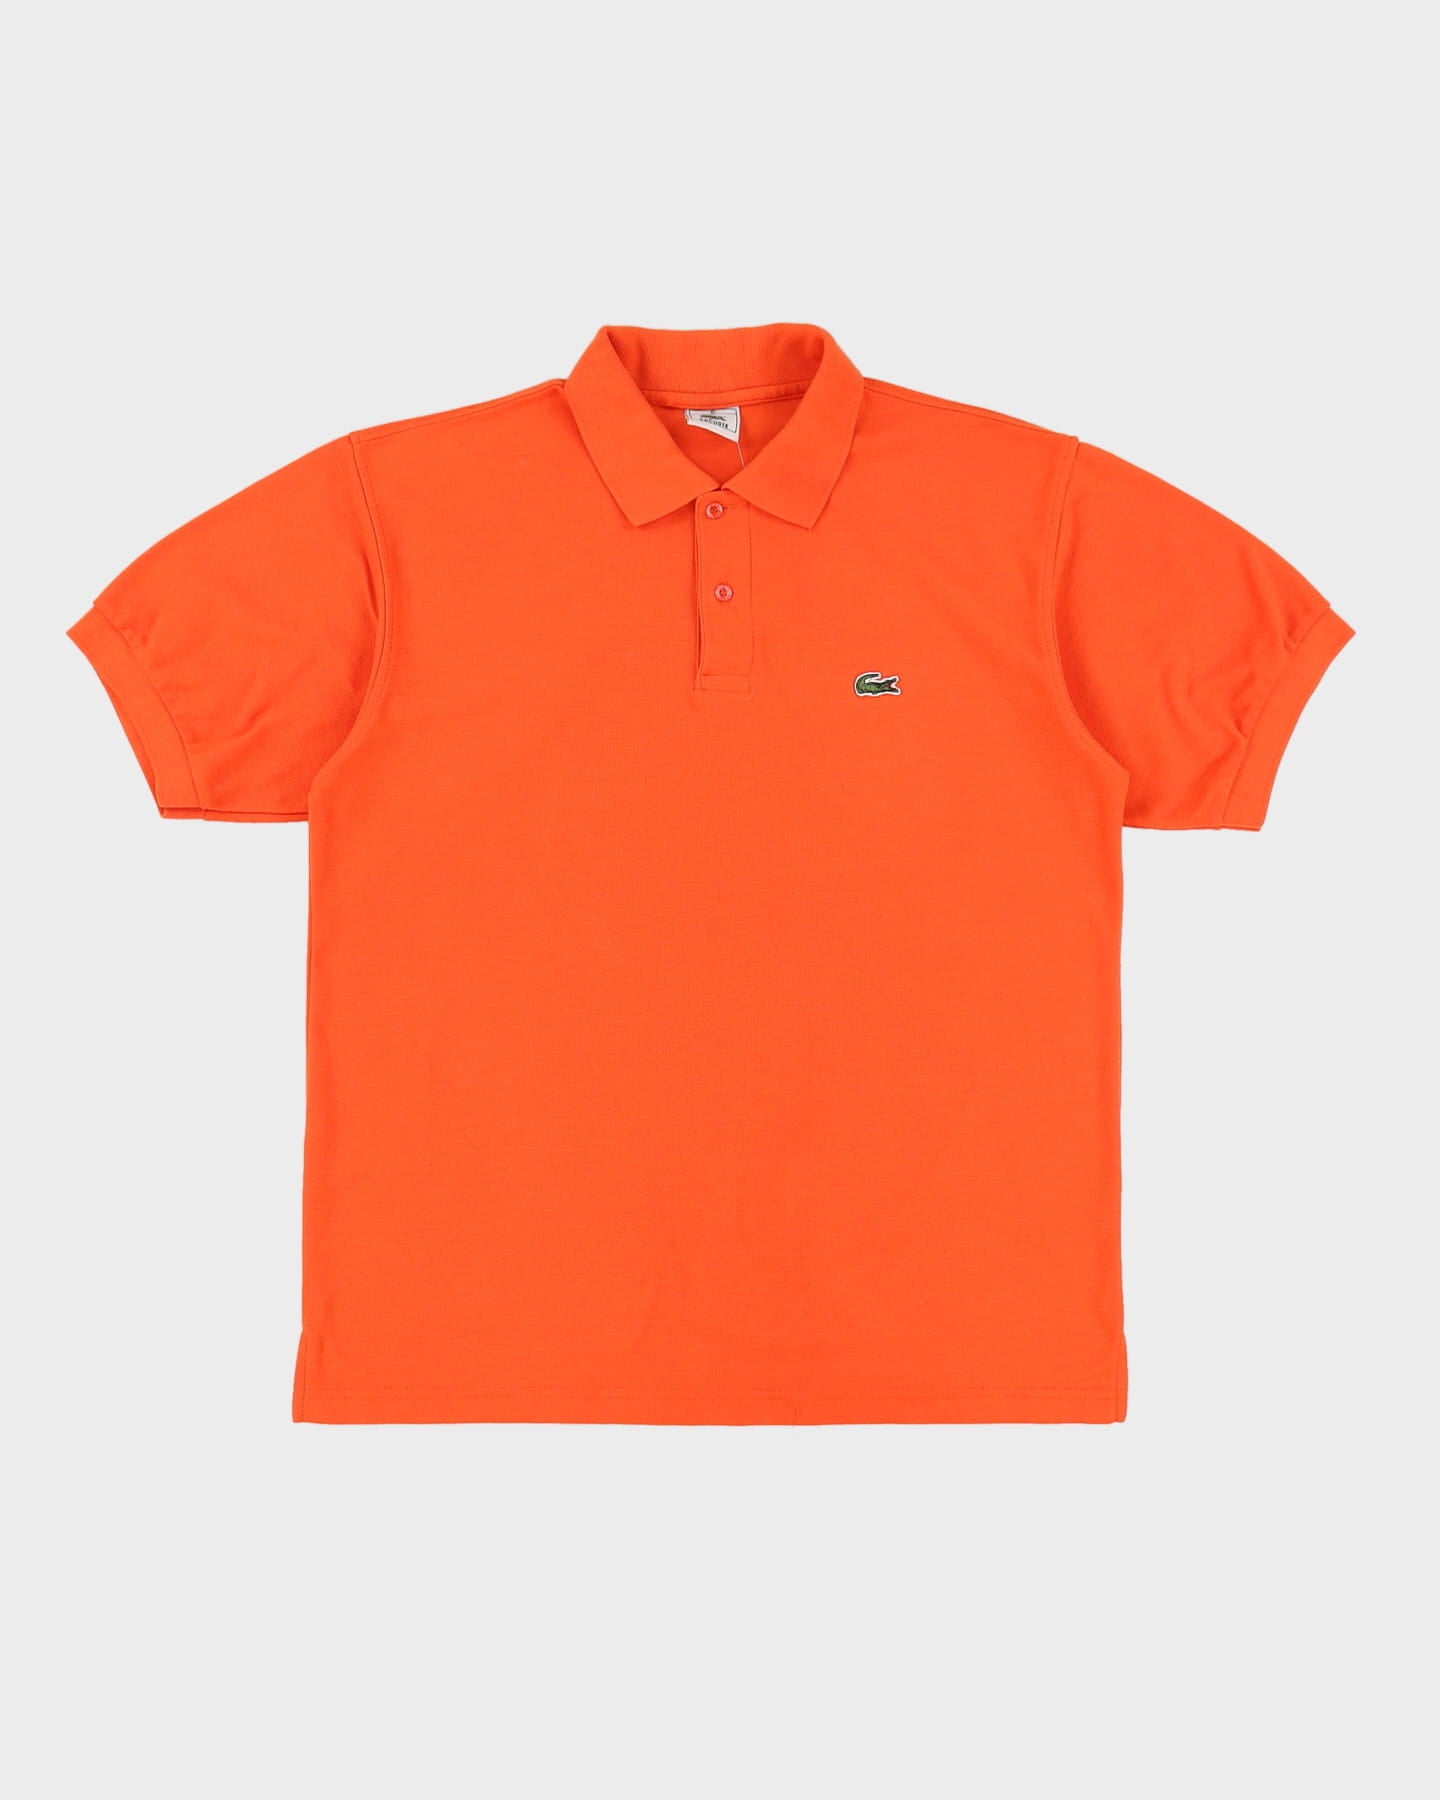 Lacoste Orange Polo Shirt - L